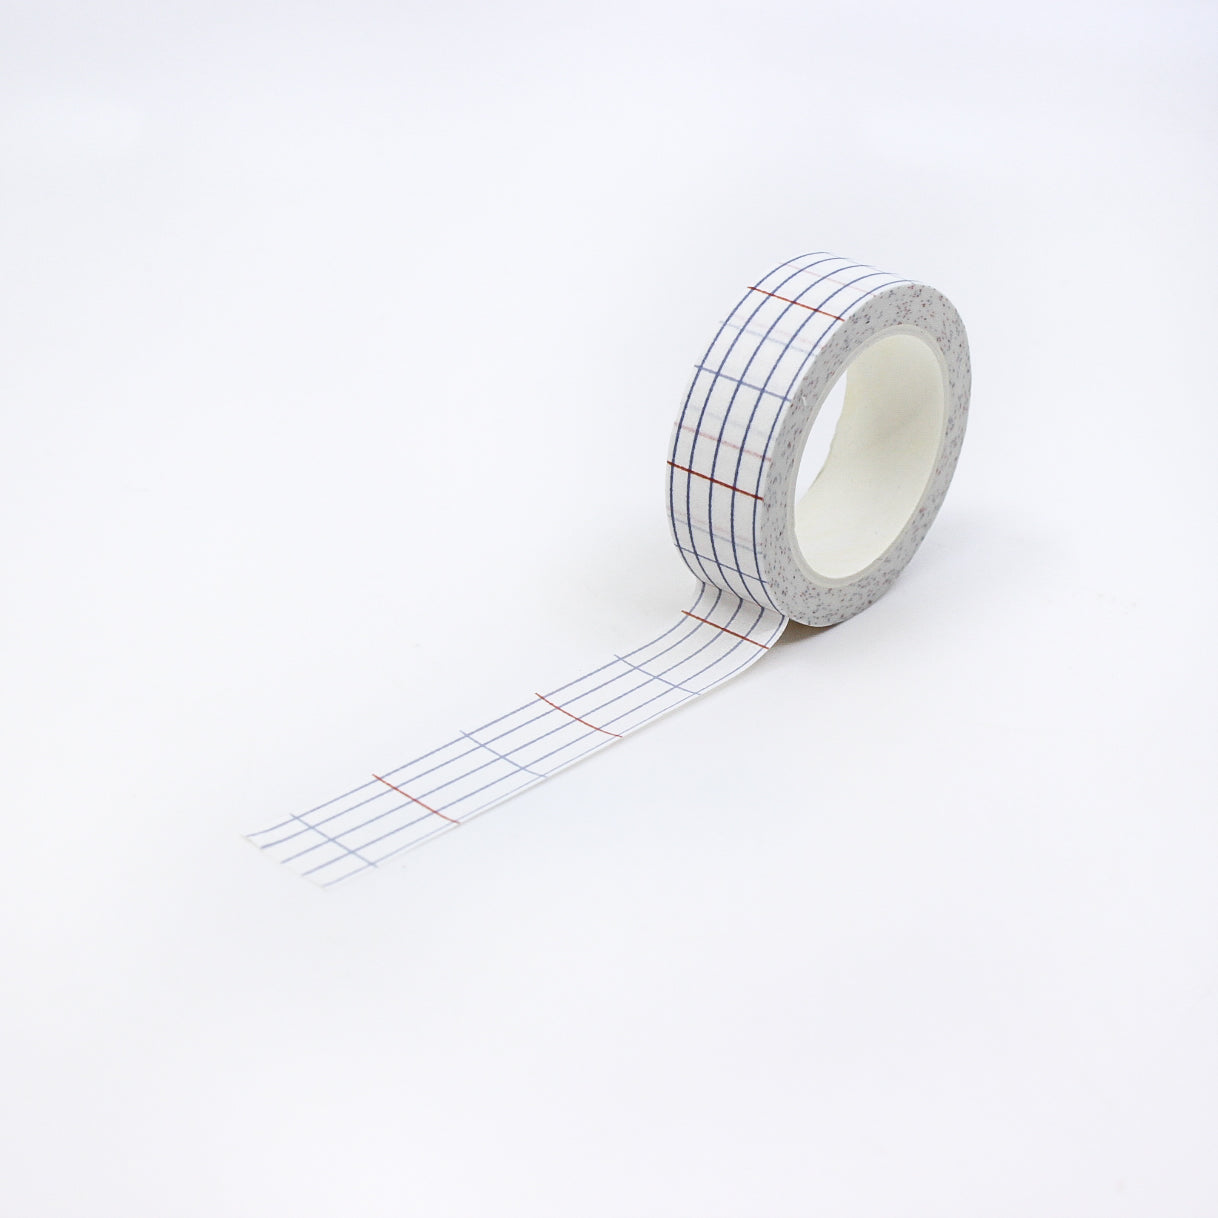 Grid Washi Tape for Journaling and Penpaling, Vintage Washi Tape 